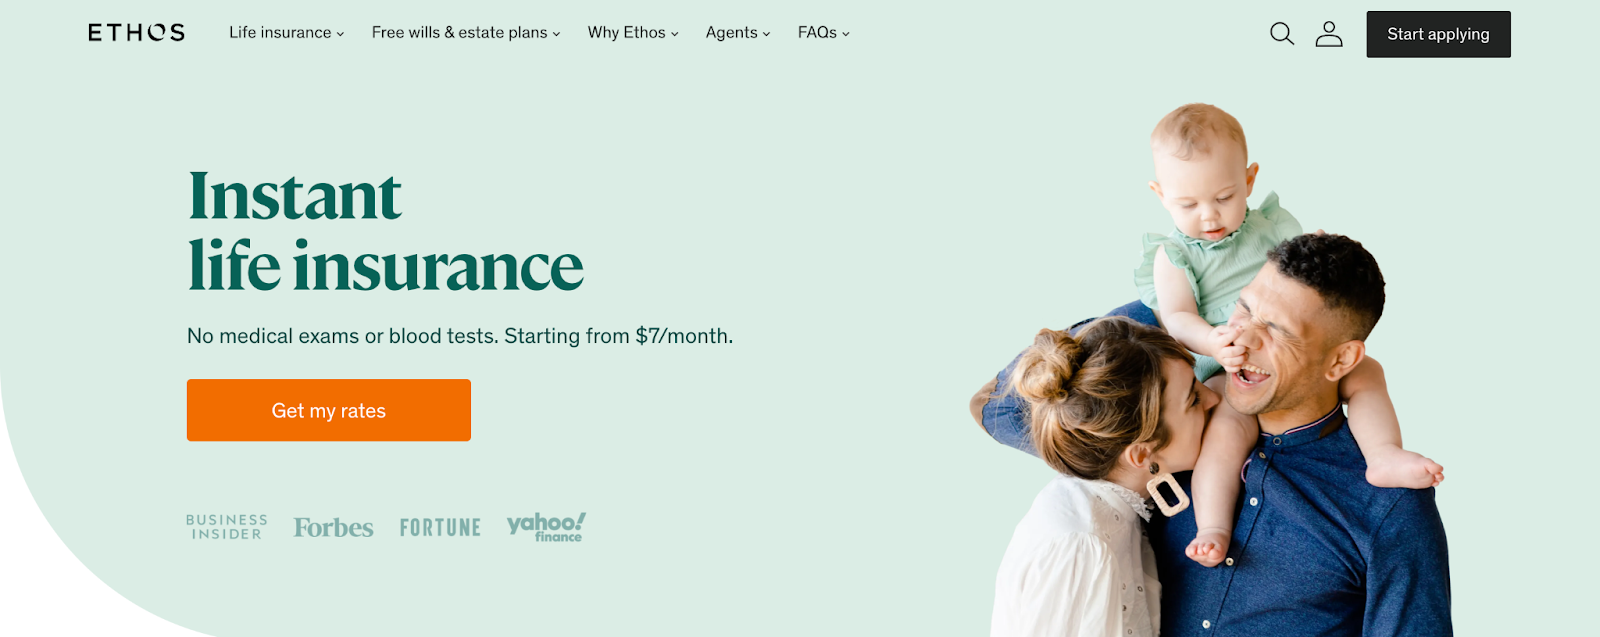 Insurance website design, example from Ethos Insurance